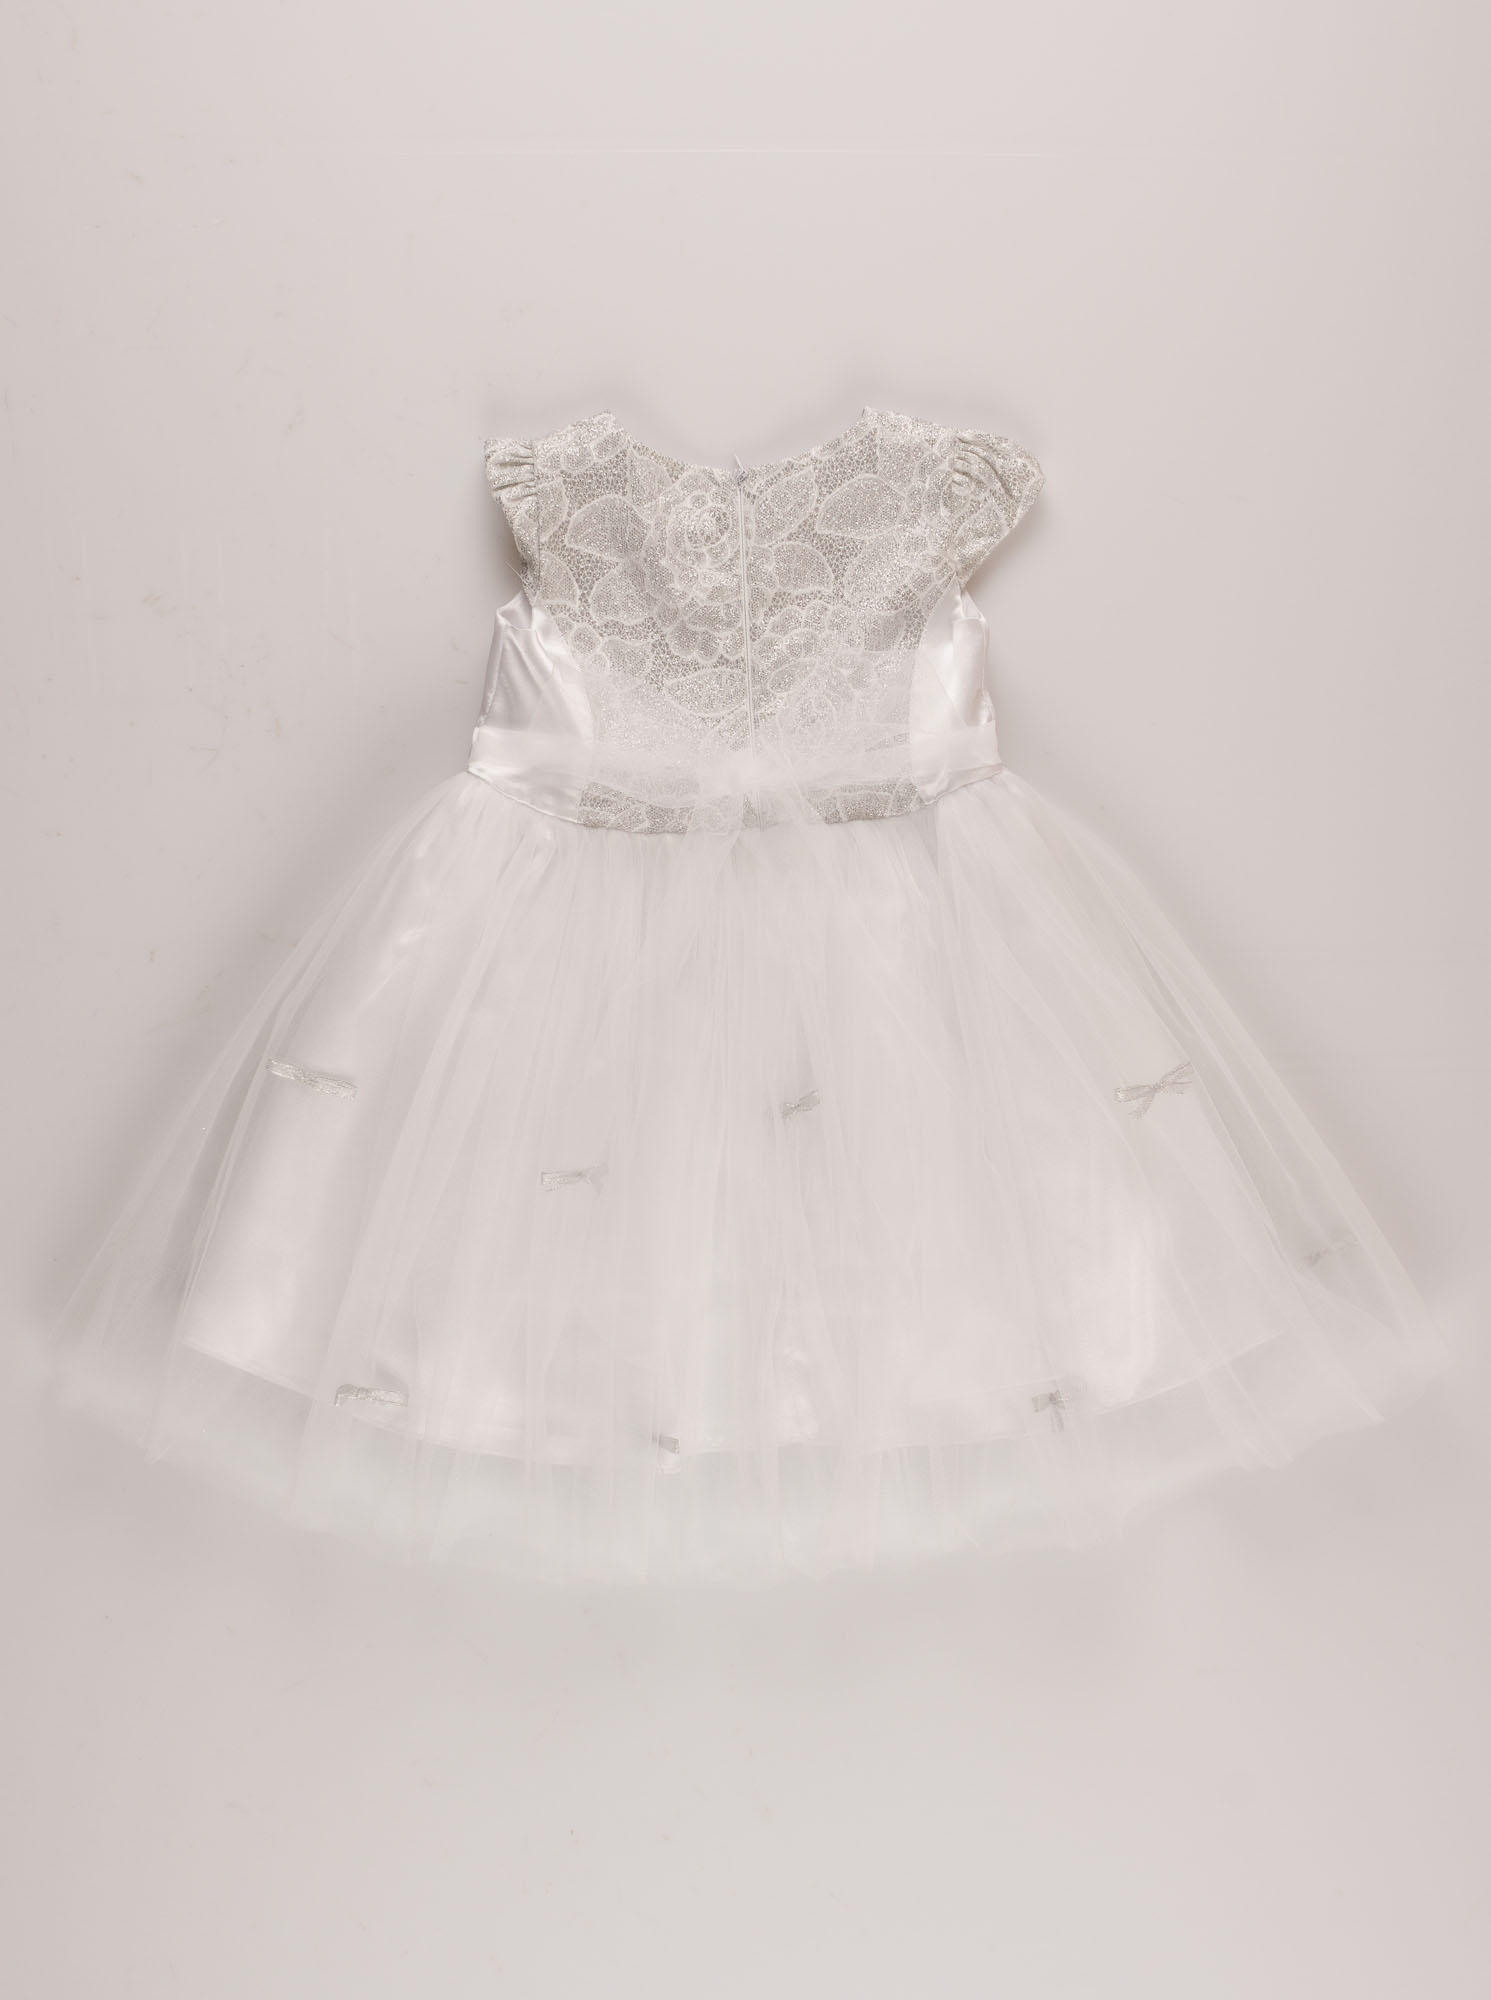 Нарядное платье для девочки Mevis белое 2263-01 - розміри